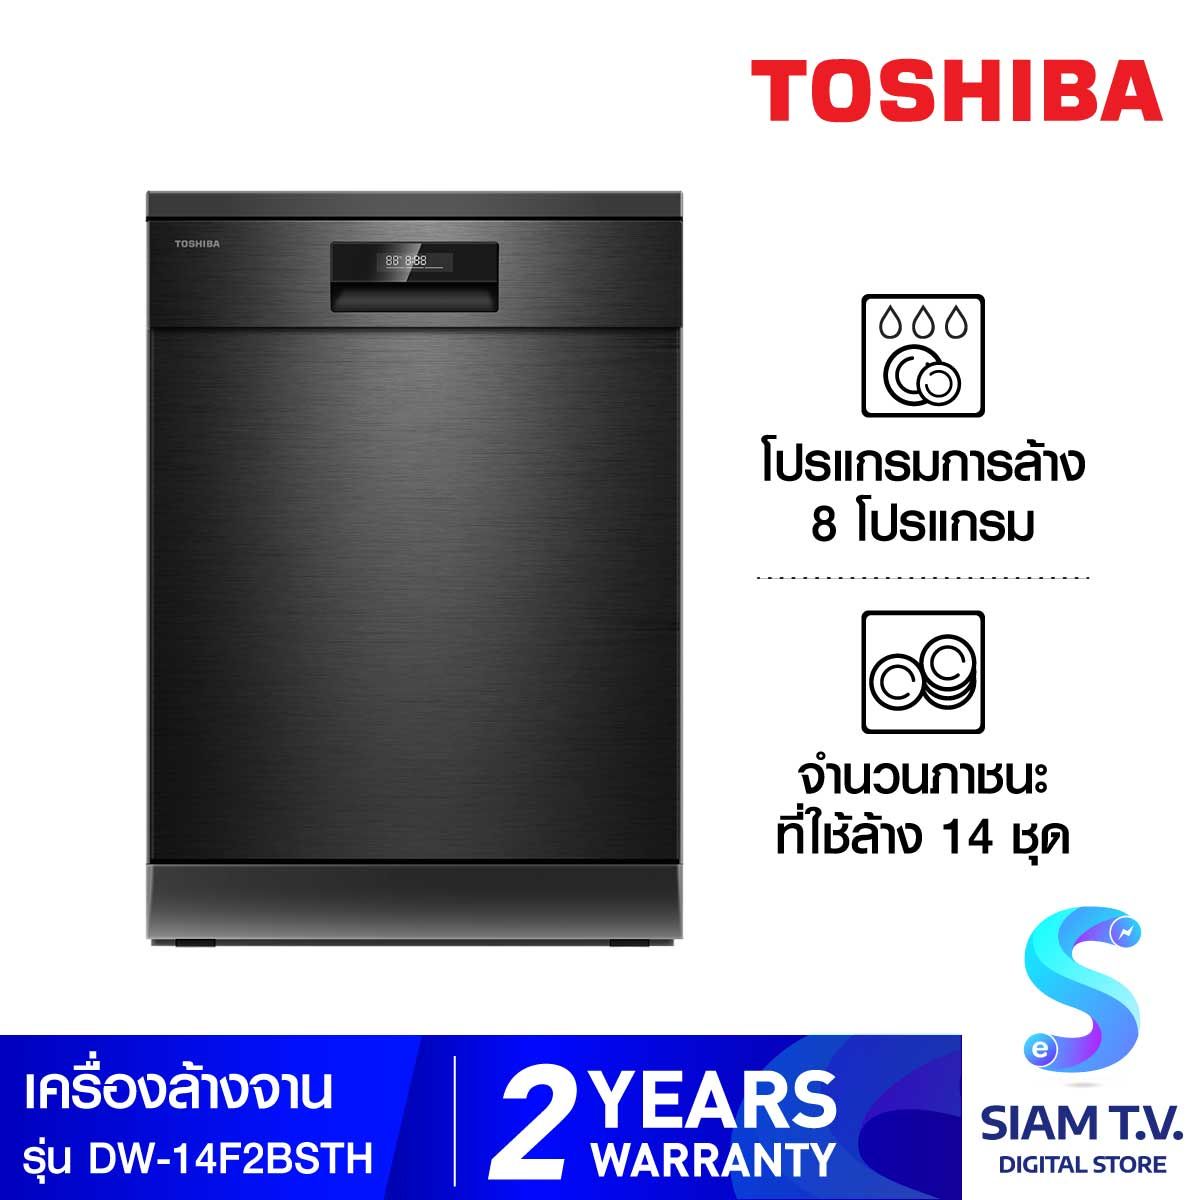 TOSHIBA เครื่องล้างจานตั้งพื้น 14 ชุด รุ่น DW-14F2(BS)-TH